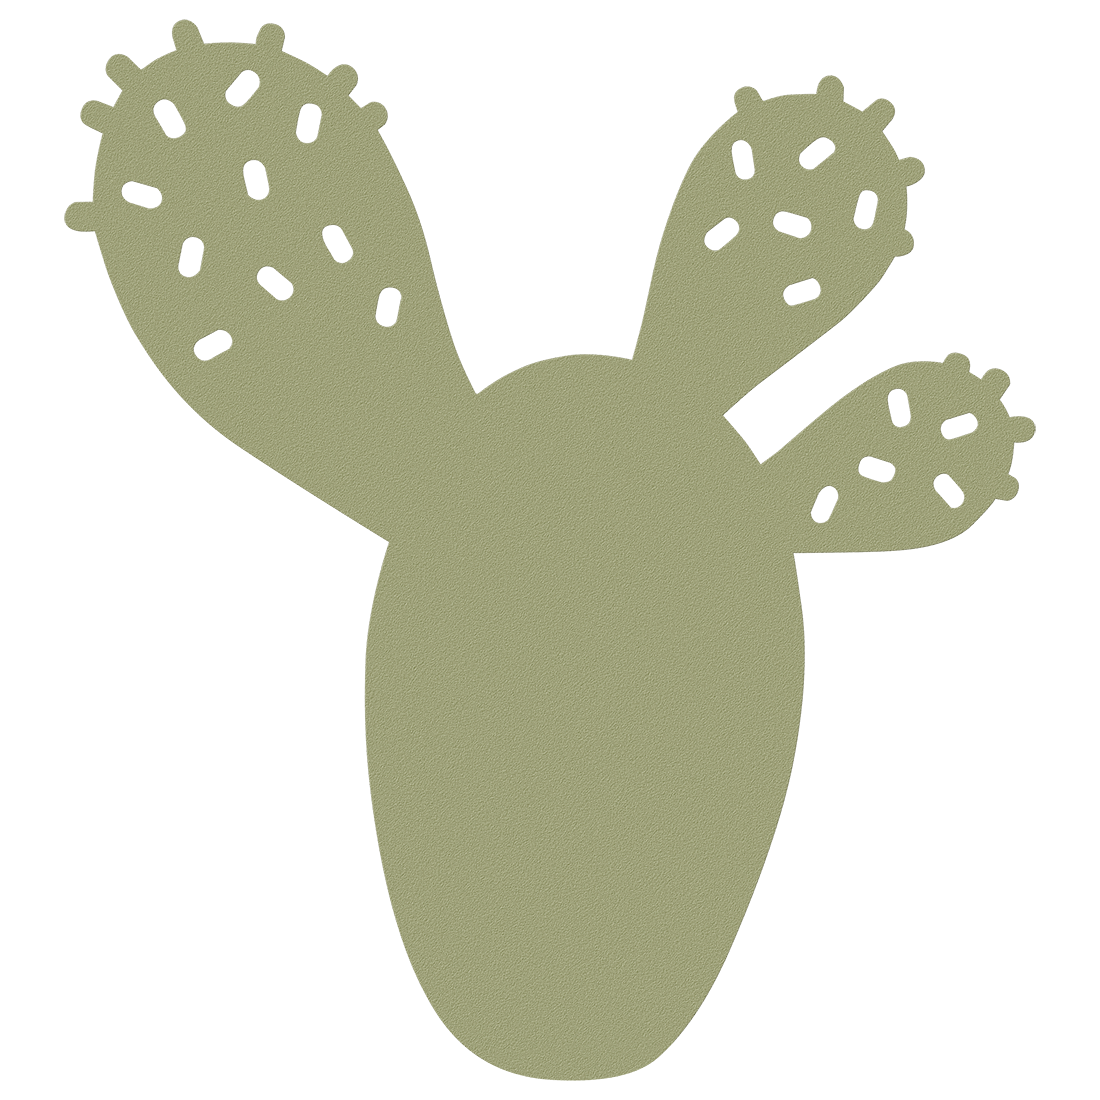  Khay BOUQUET SAUVAGE Cactus 25,5 x 24 